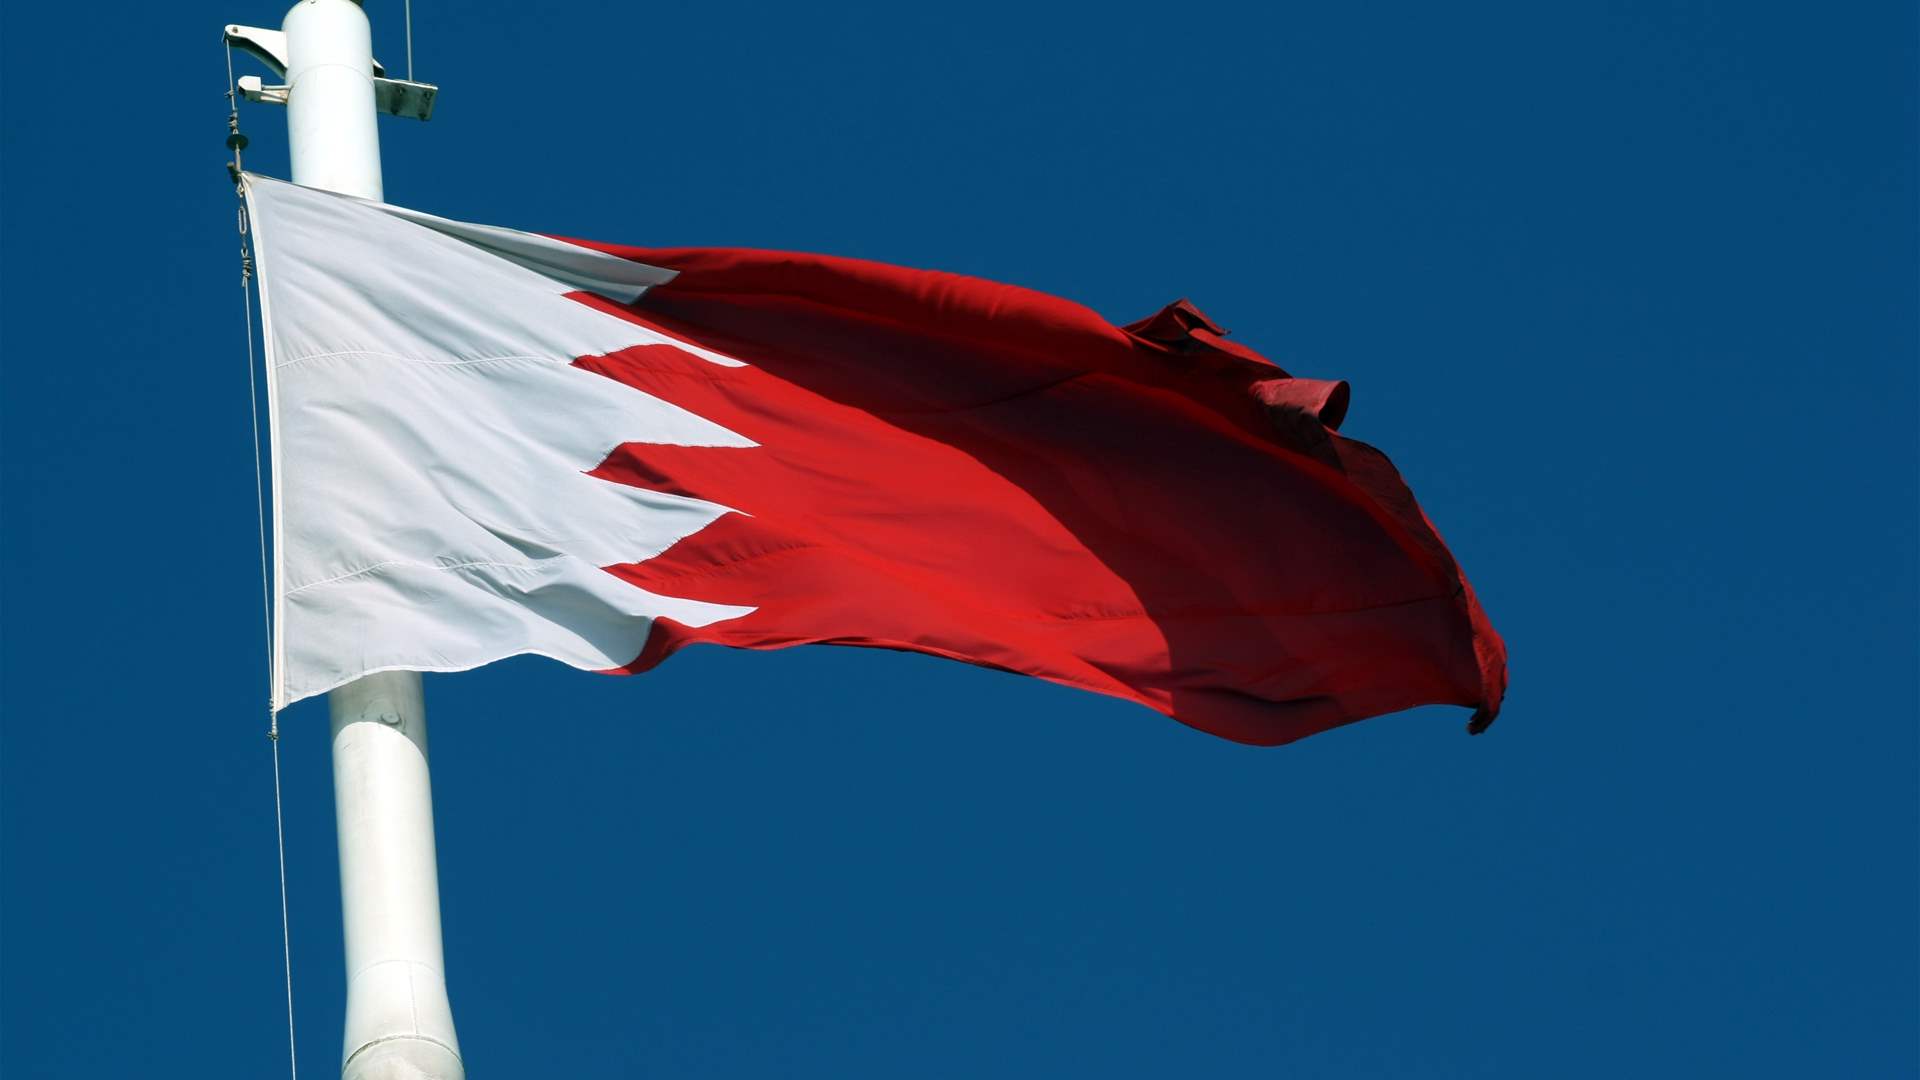 Al Jazeera: Bahrain summons envoy to Israel, suspends economic relations